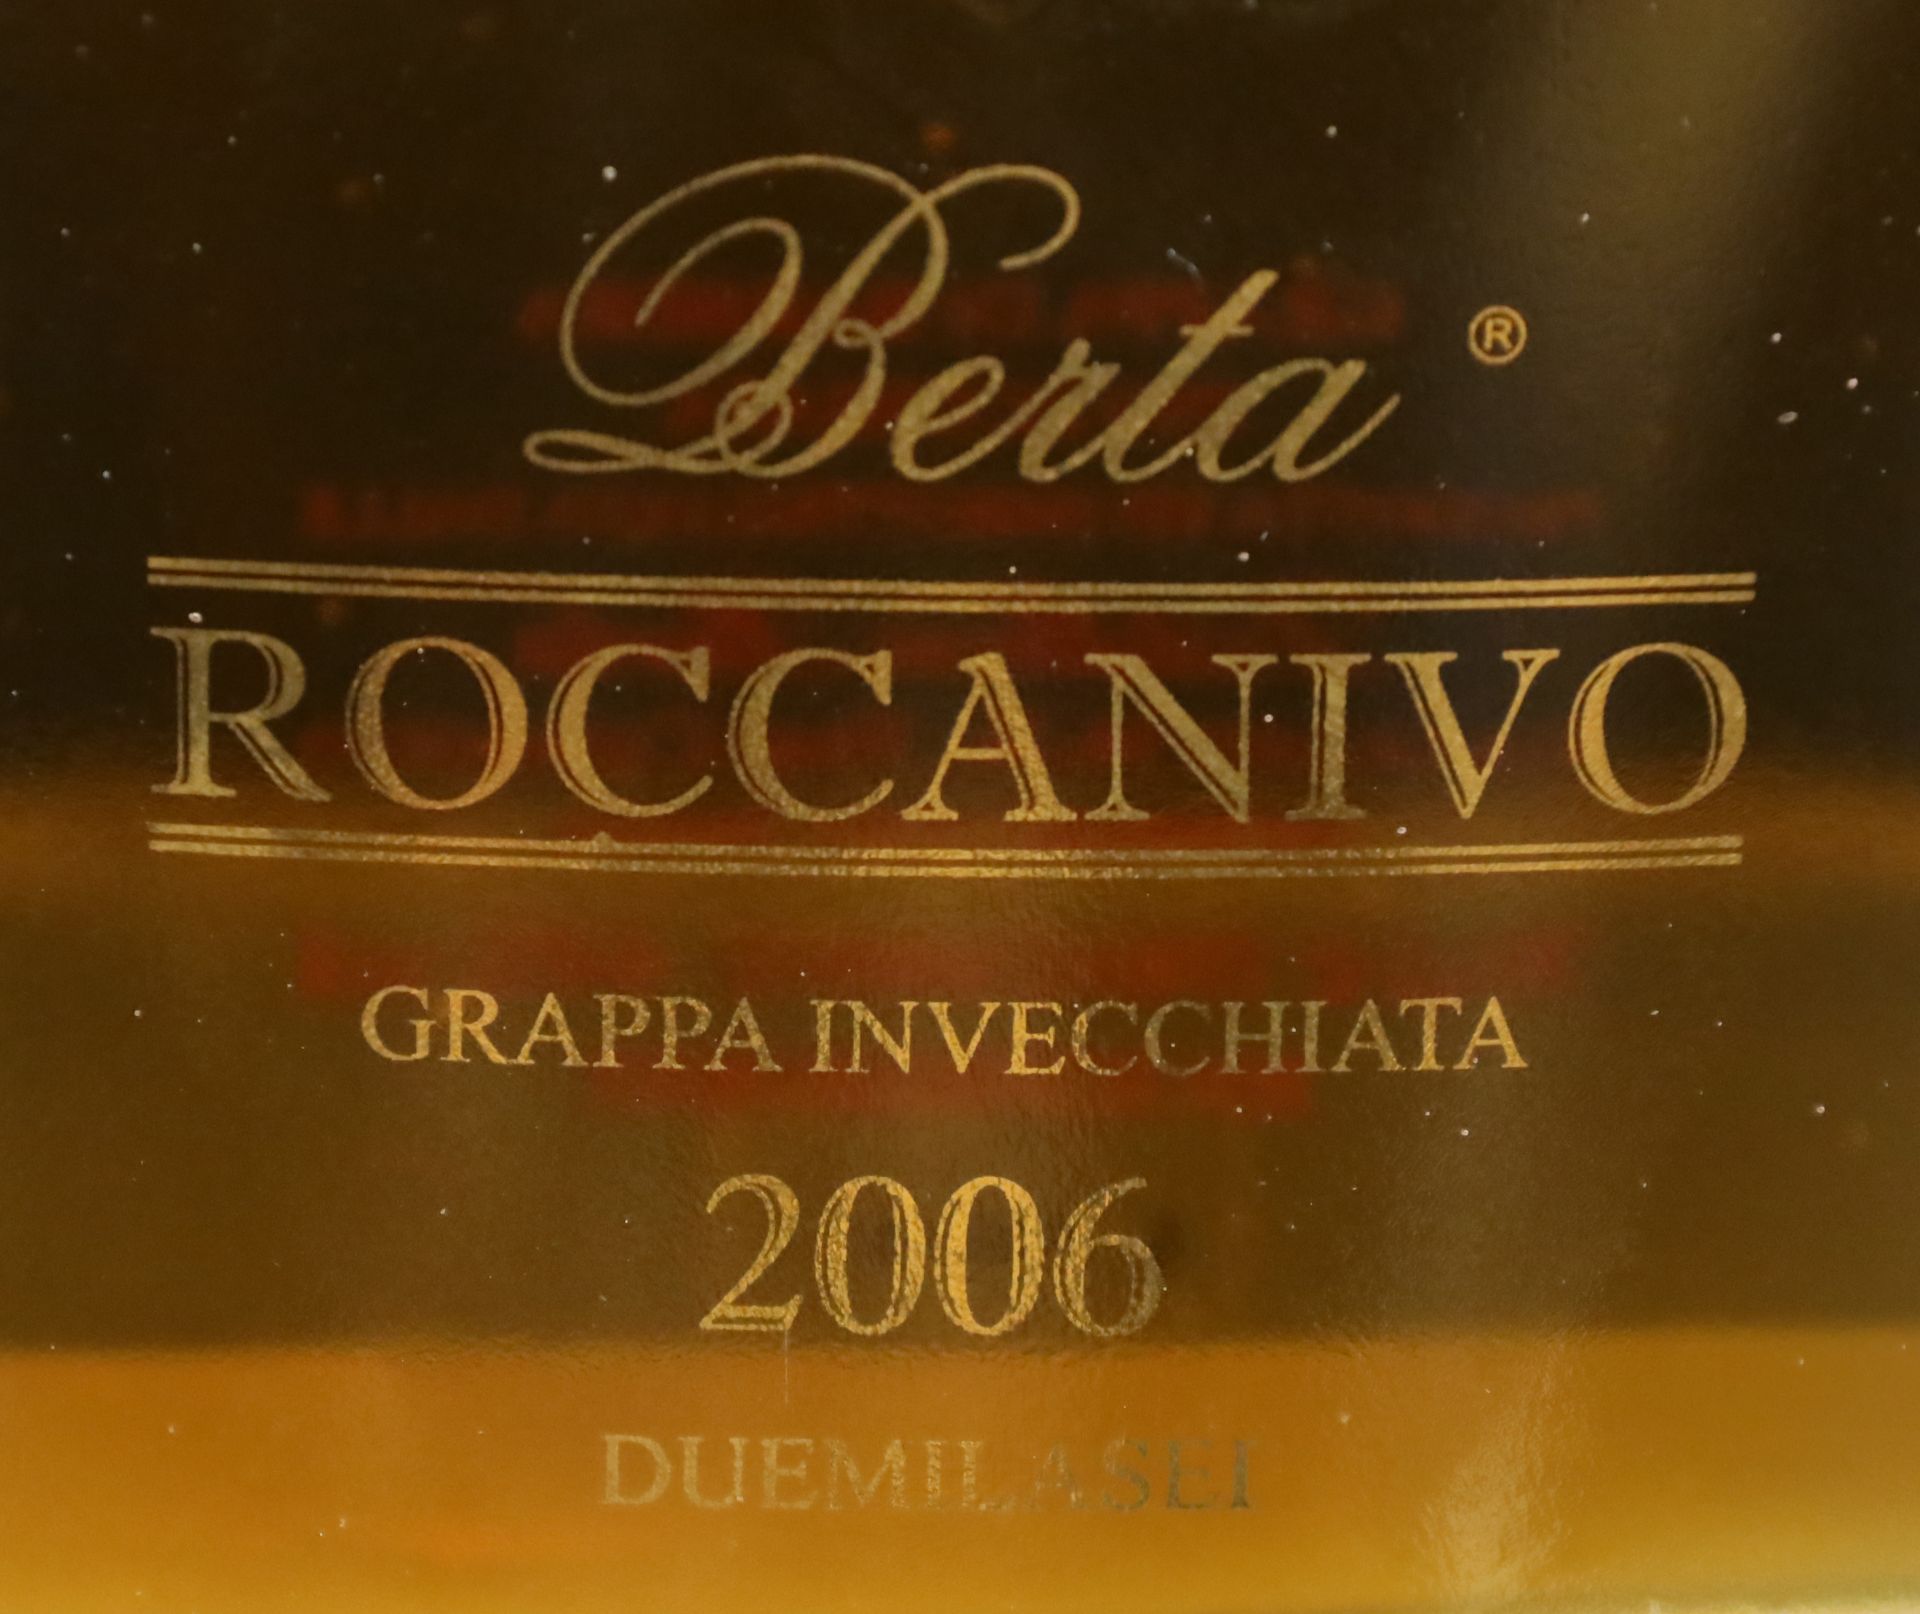 1 bottle of grappa. BERTA. ‘Roccanivo’. Italy. 2006. - Image 5 of 5